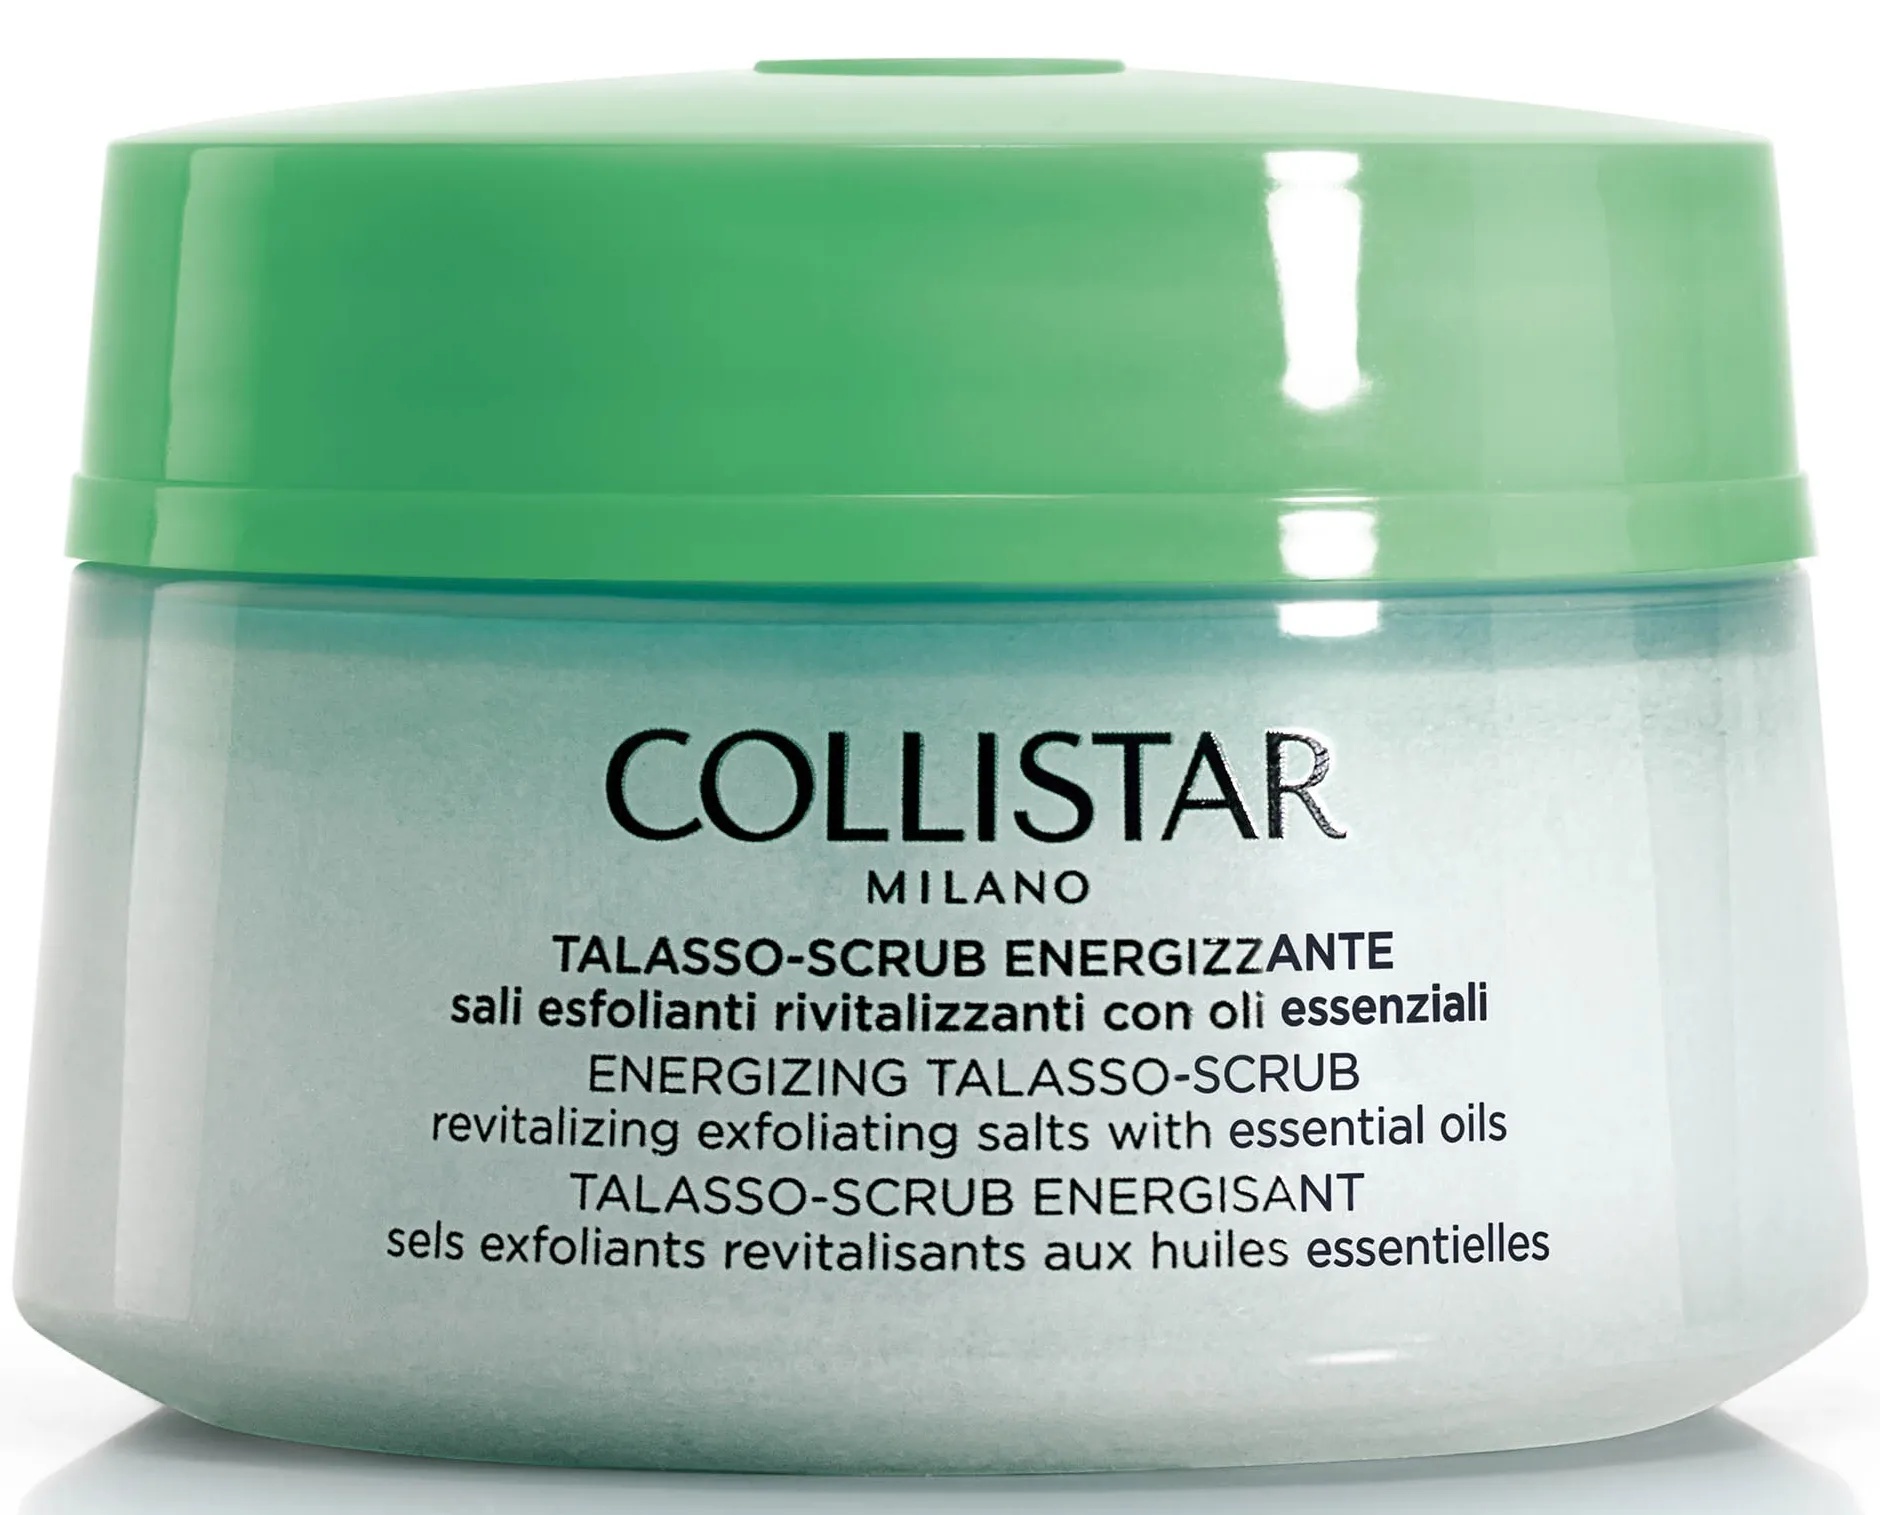 Collistar Energizing Talasso-scrub